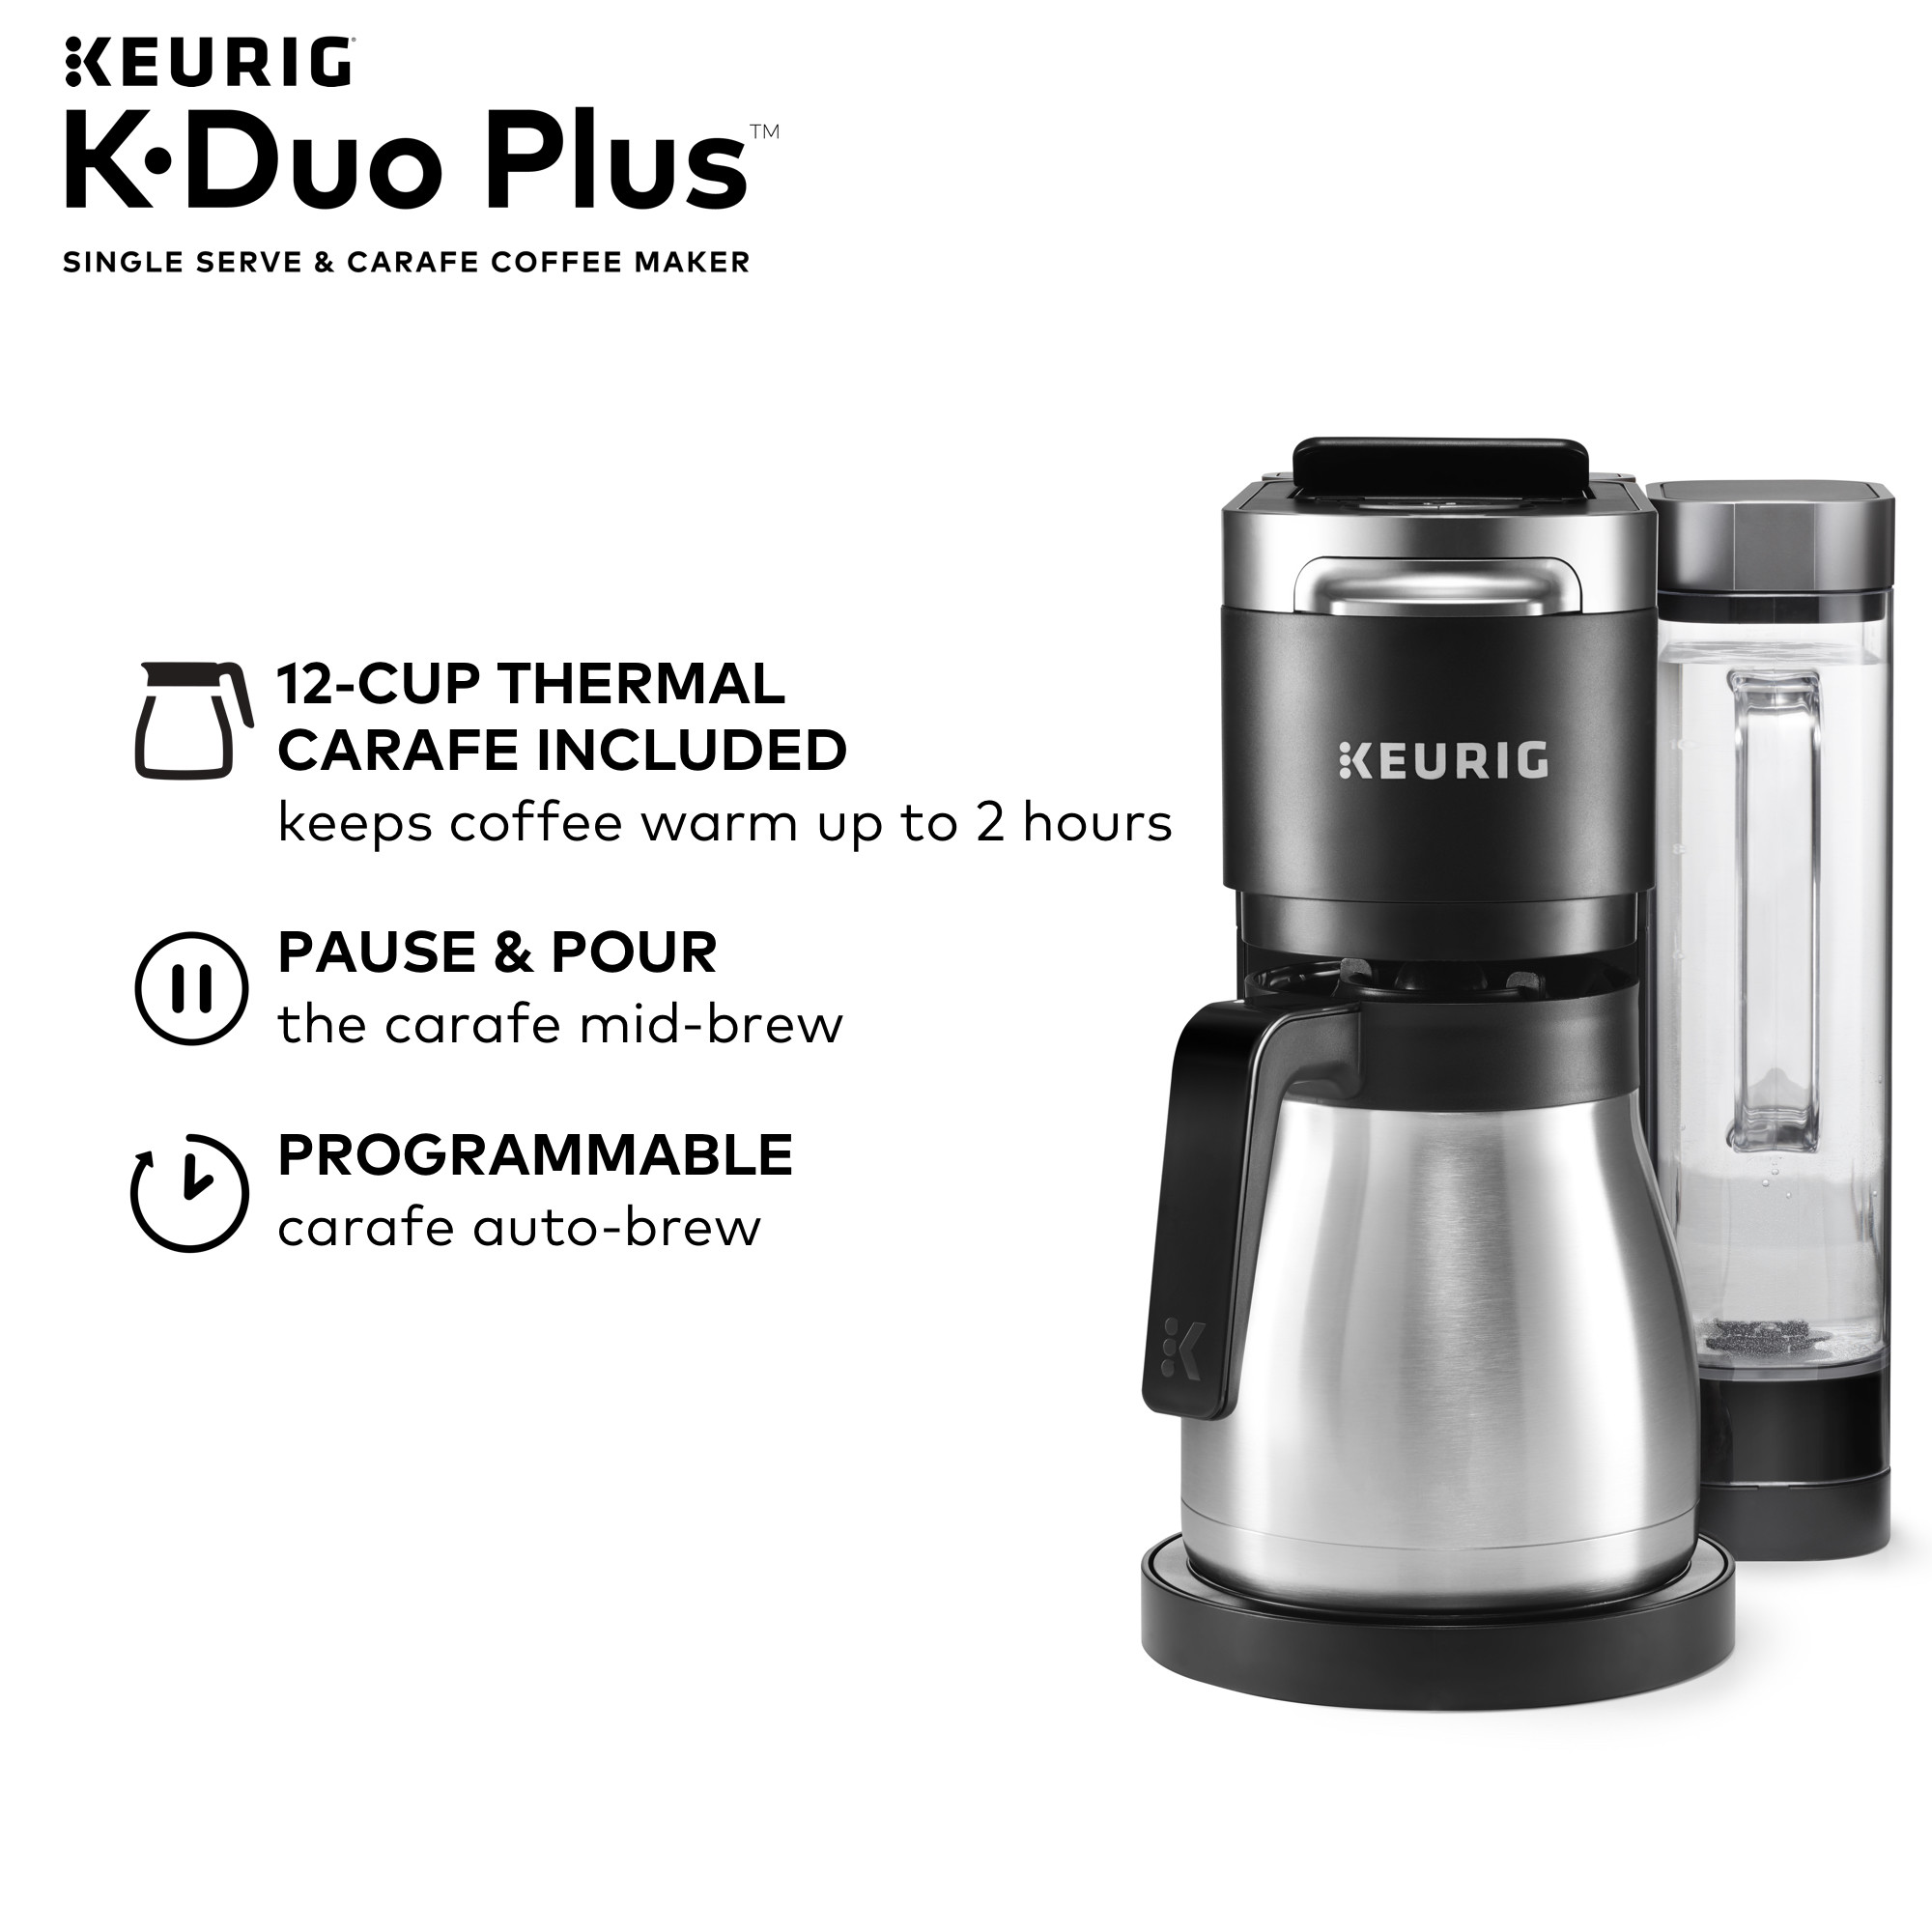 Keurig K-Duo Plus Single Serve & Carafe Coffee Maker - image 16 of 24